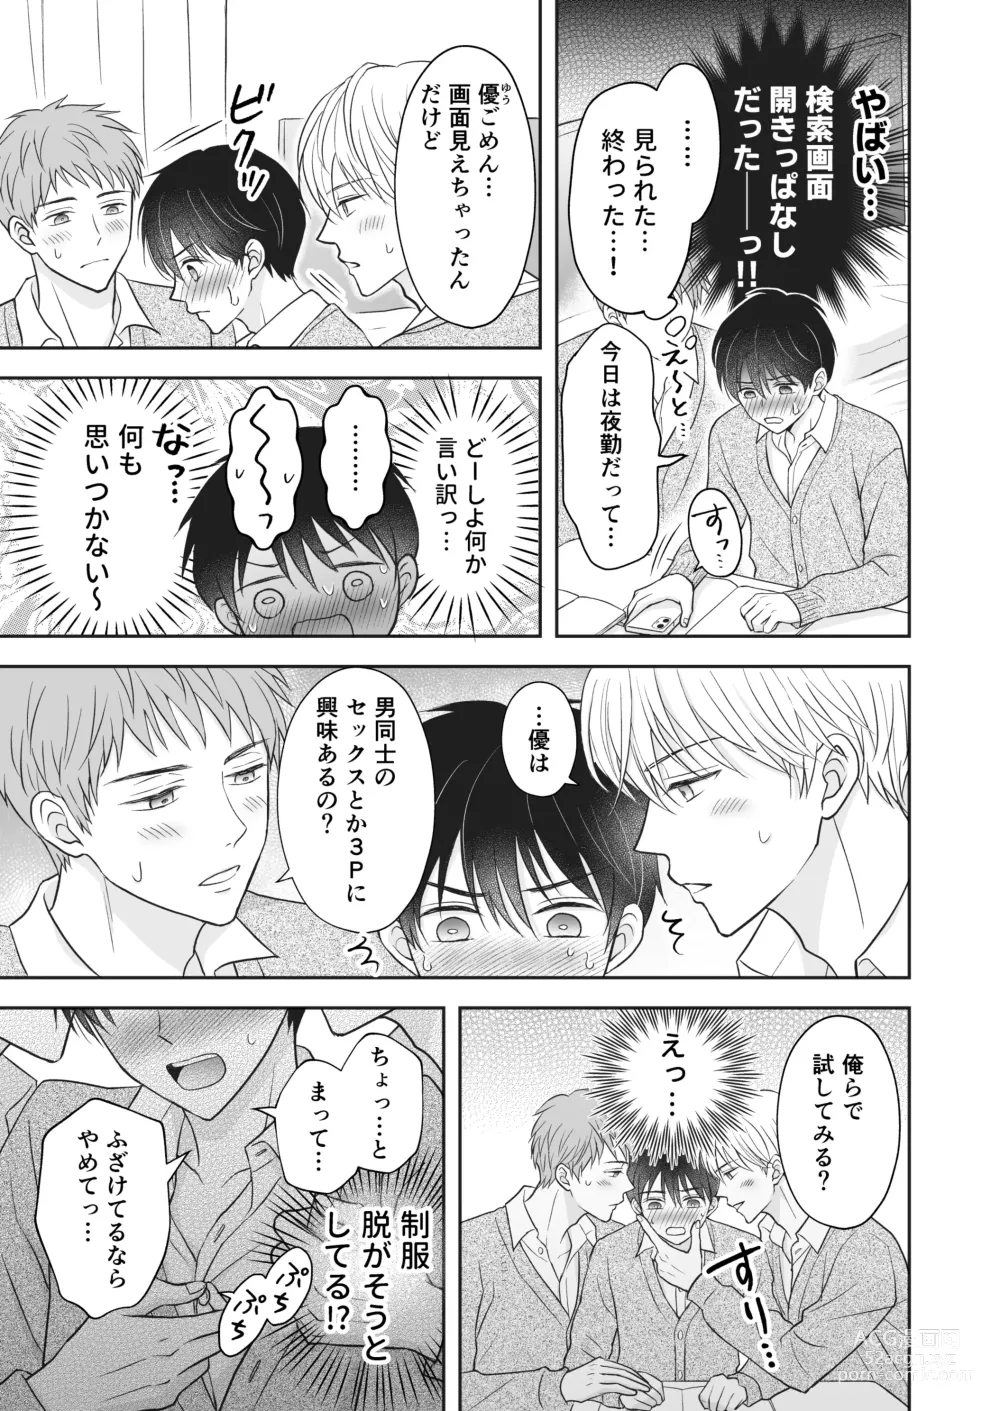 Page 6 of doujinshi 3-nin wa Nakayoshi